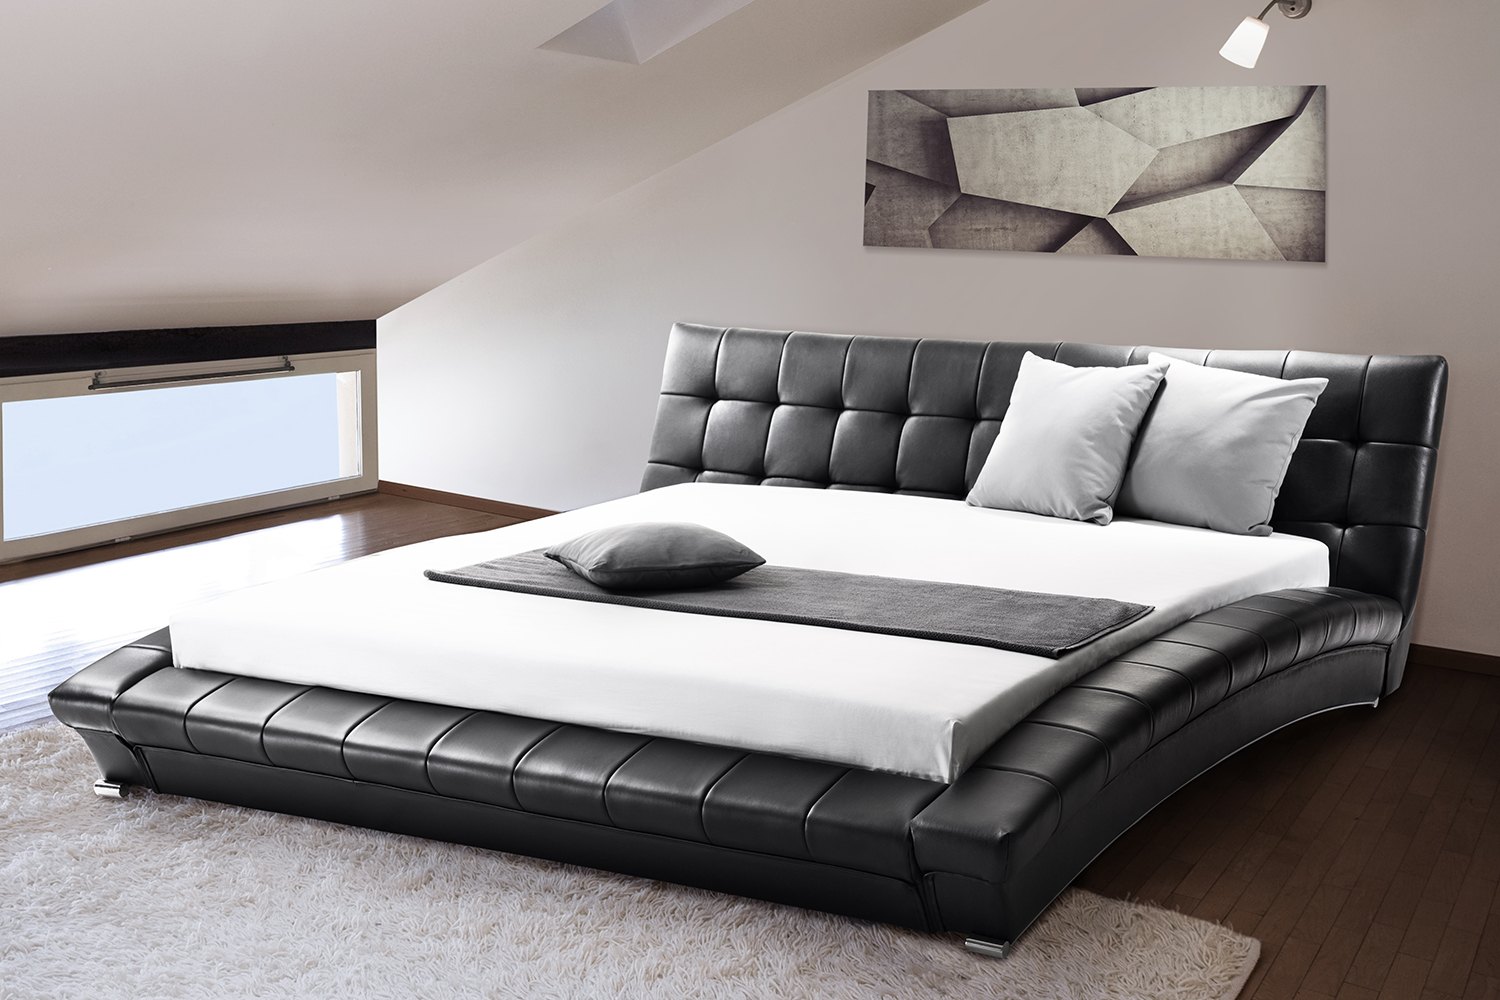 king size bed frame has gaps around mattress